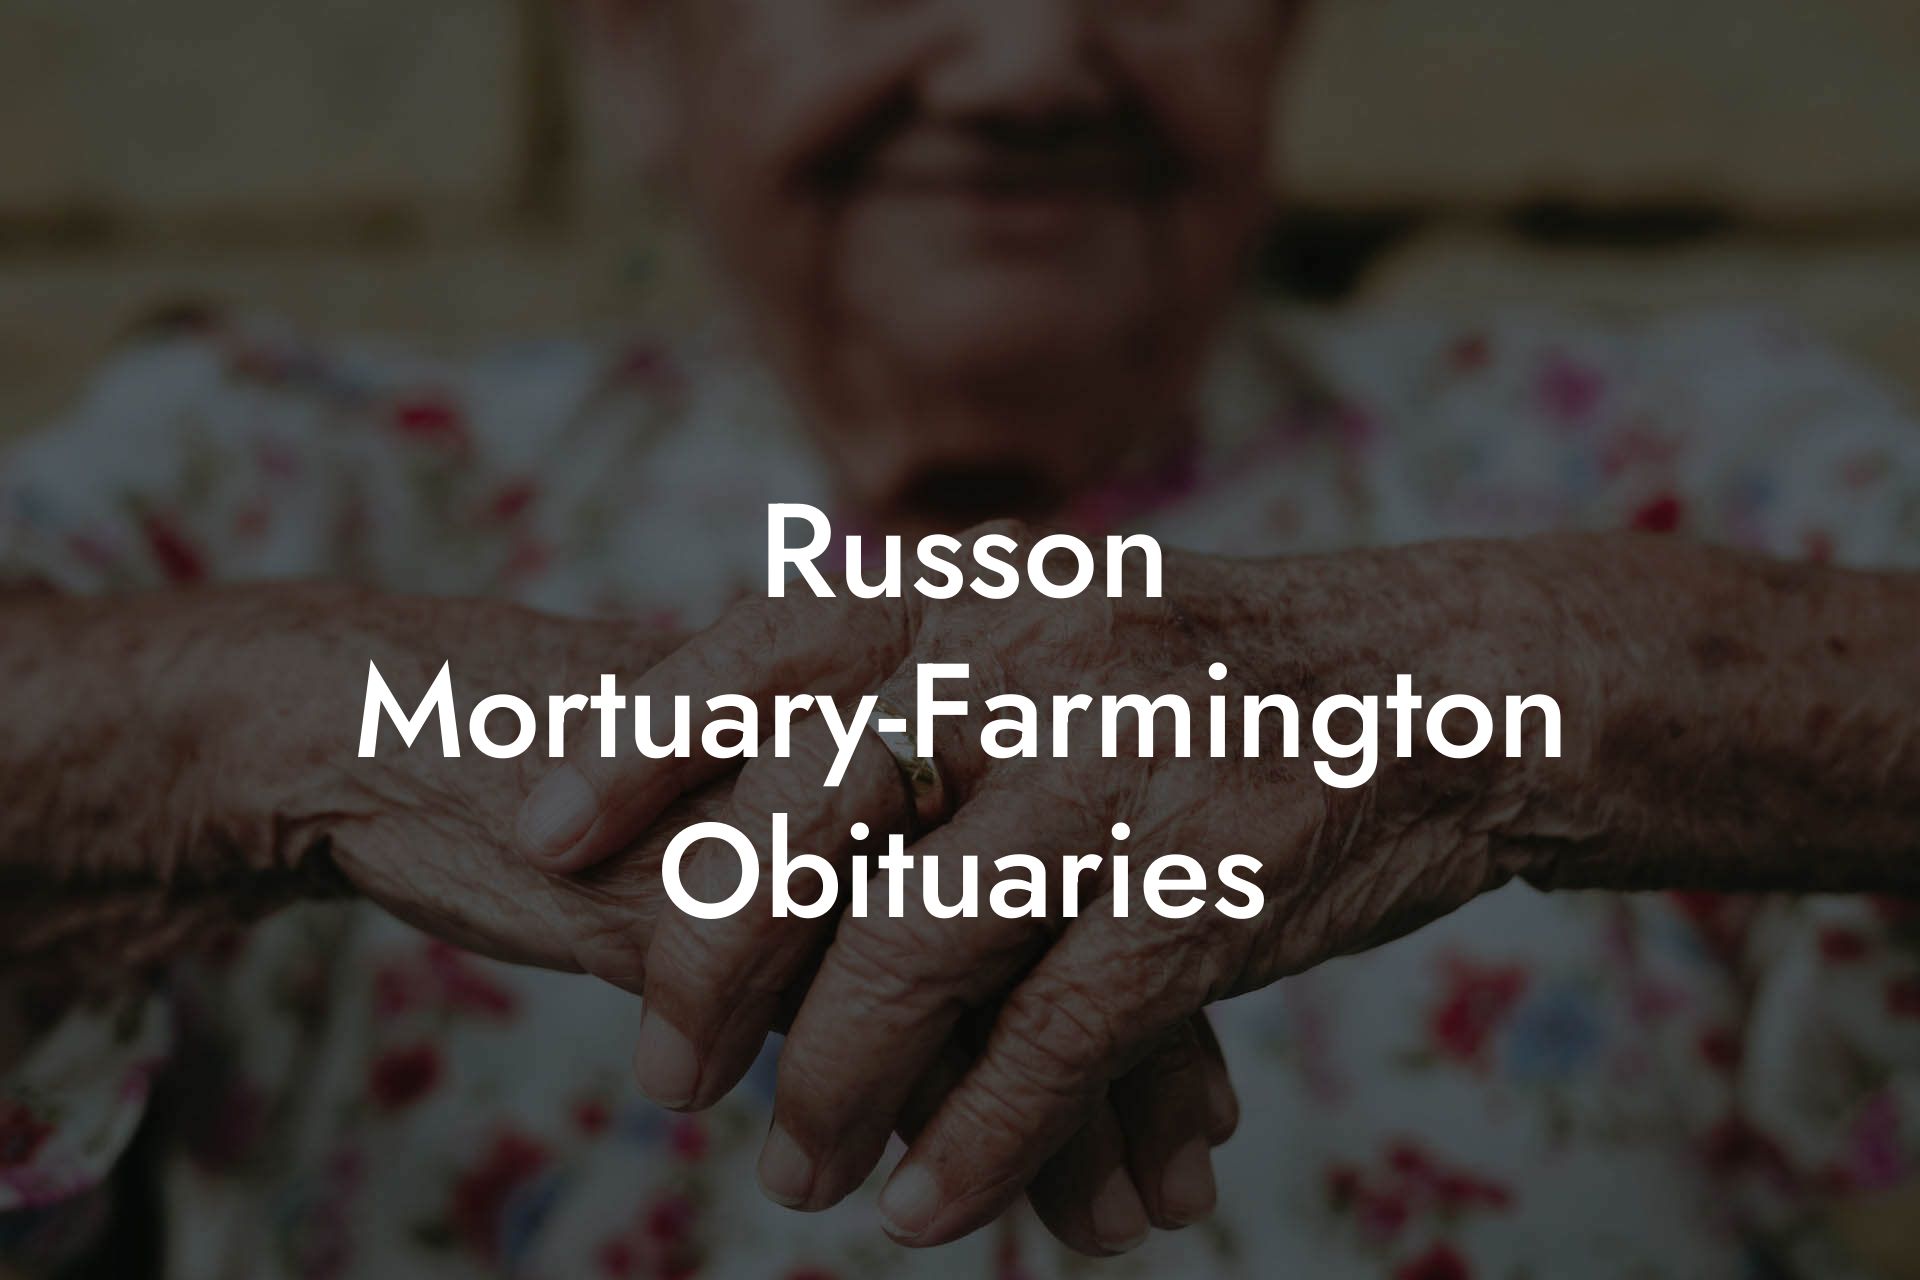 Russon Mortuary-Farmington Obituaries